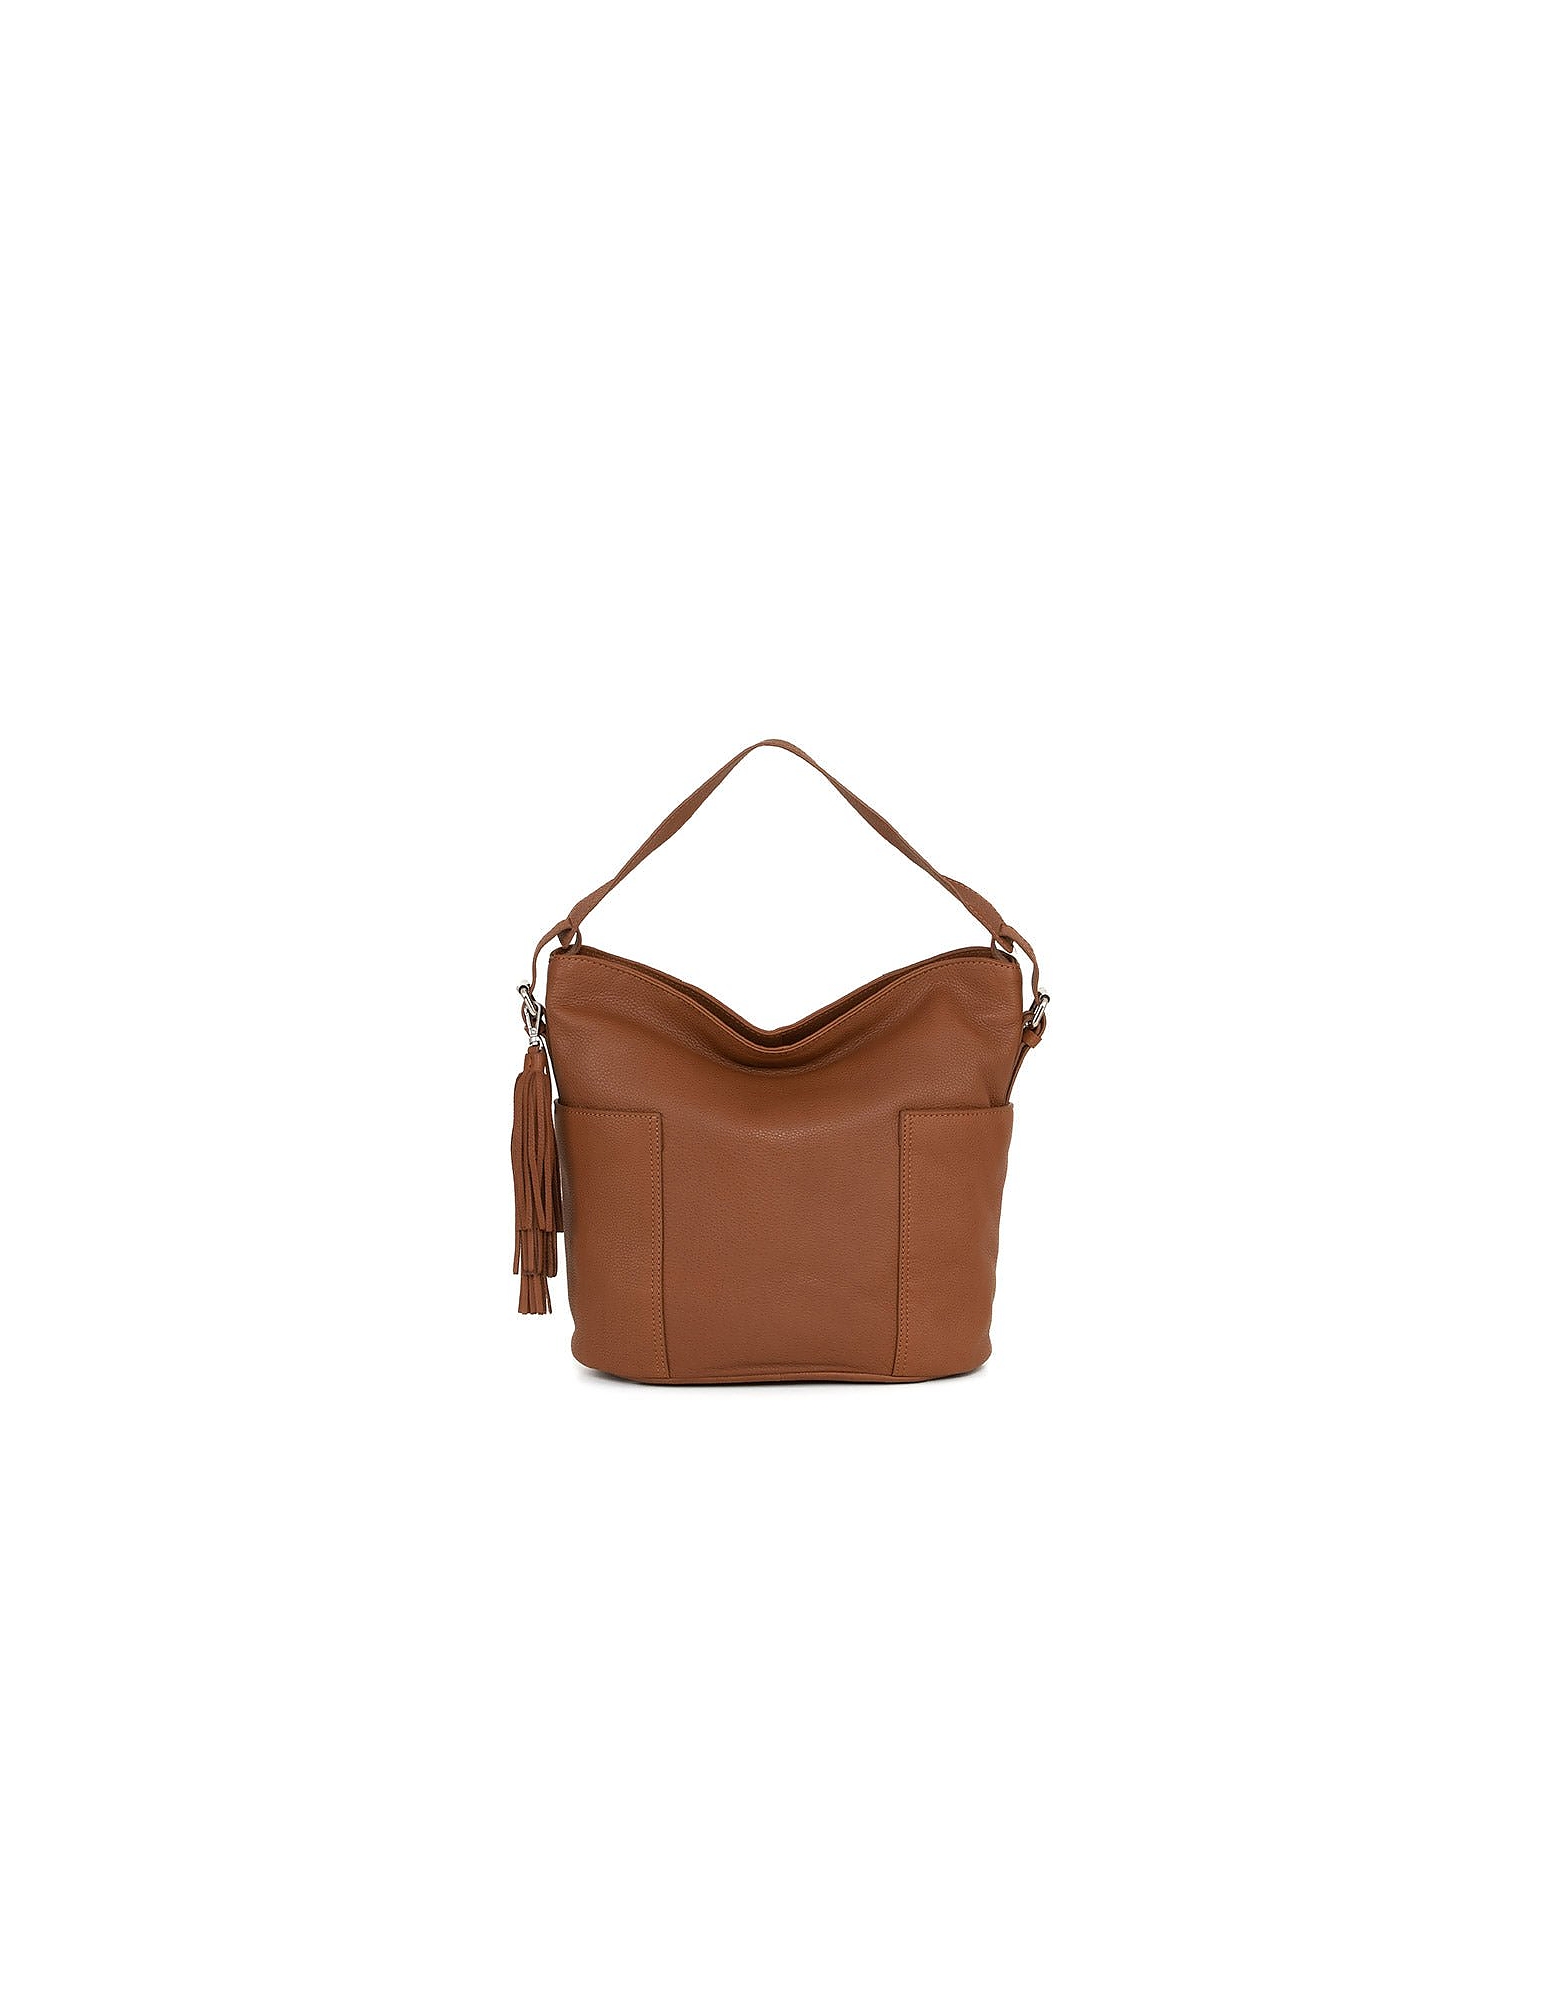 The Trend Designer Handbags 4356264 - Shoulder Bag In Marron